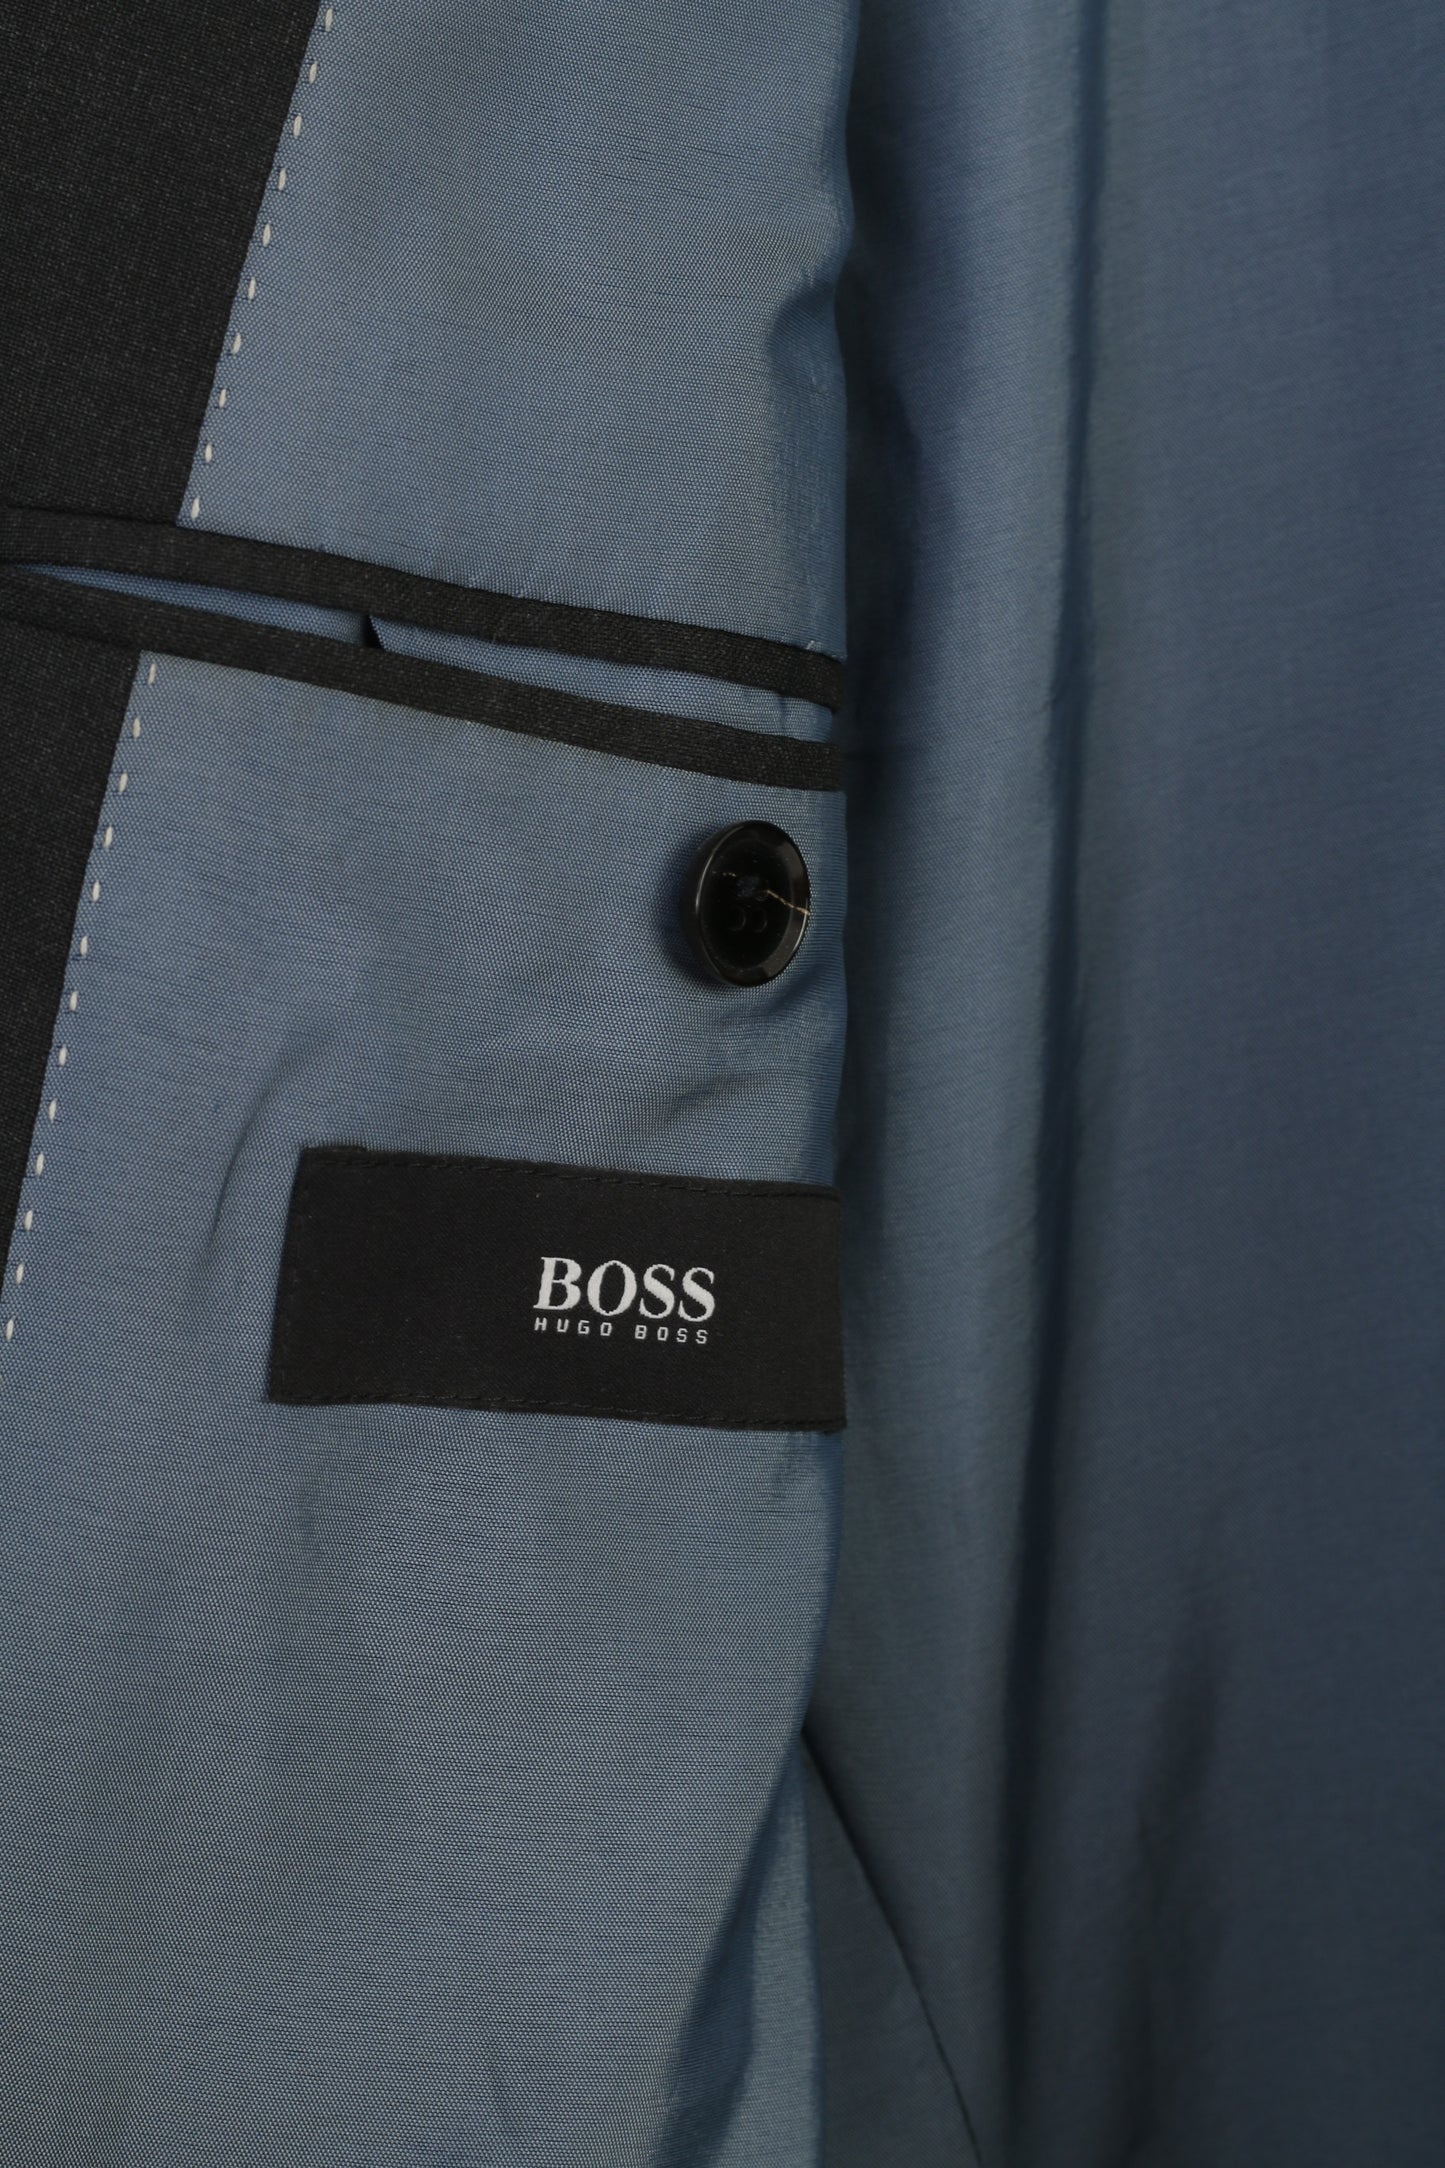 Hugo Boss Men 50 40 Blazer Charcoal Wool Single Breasted Vintage Jacket